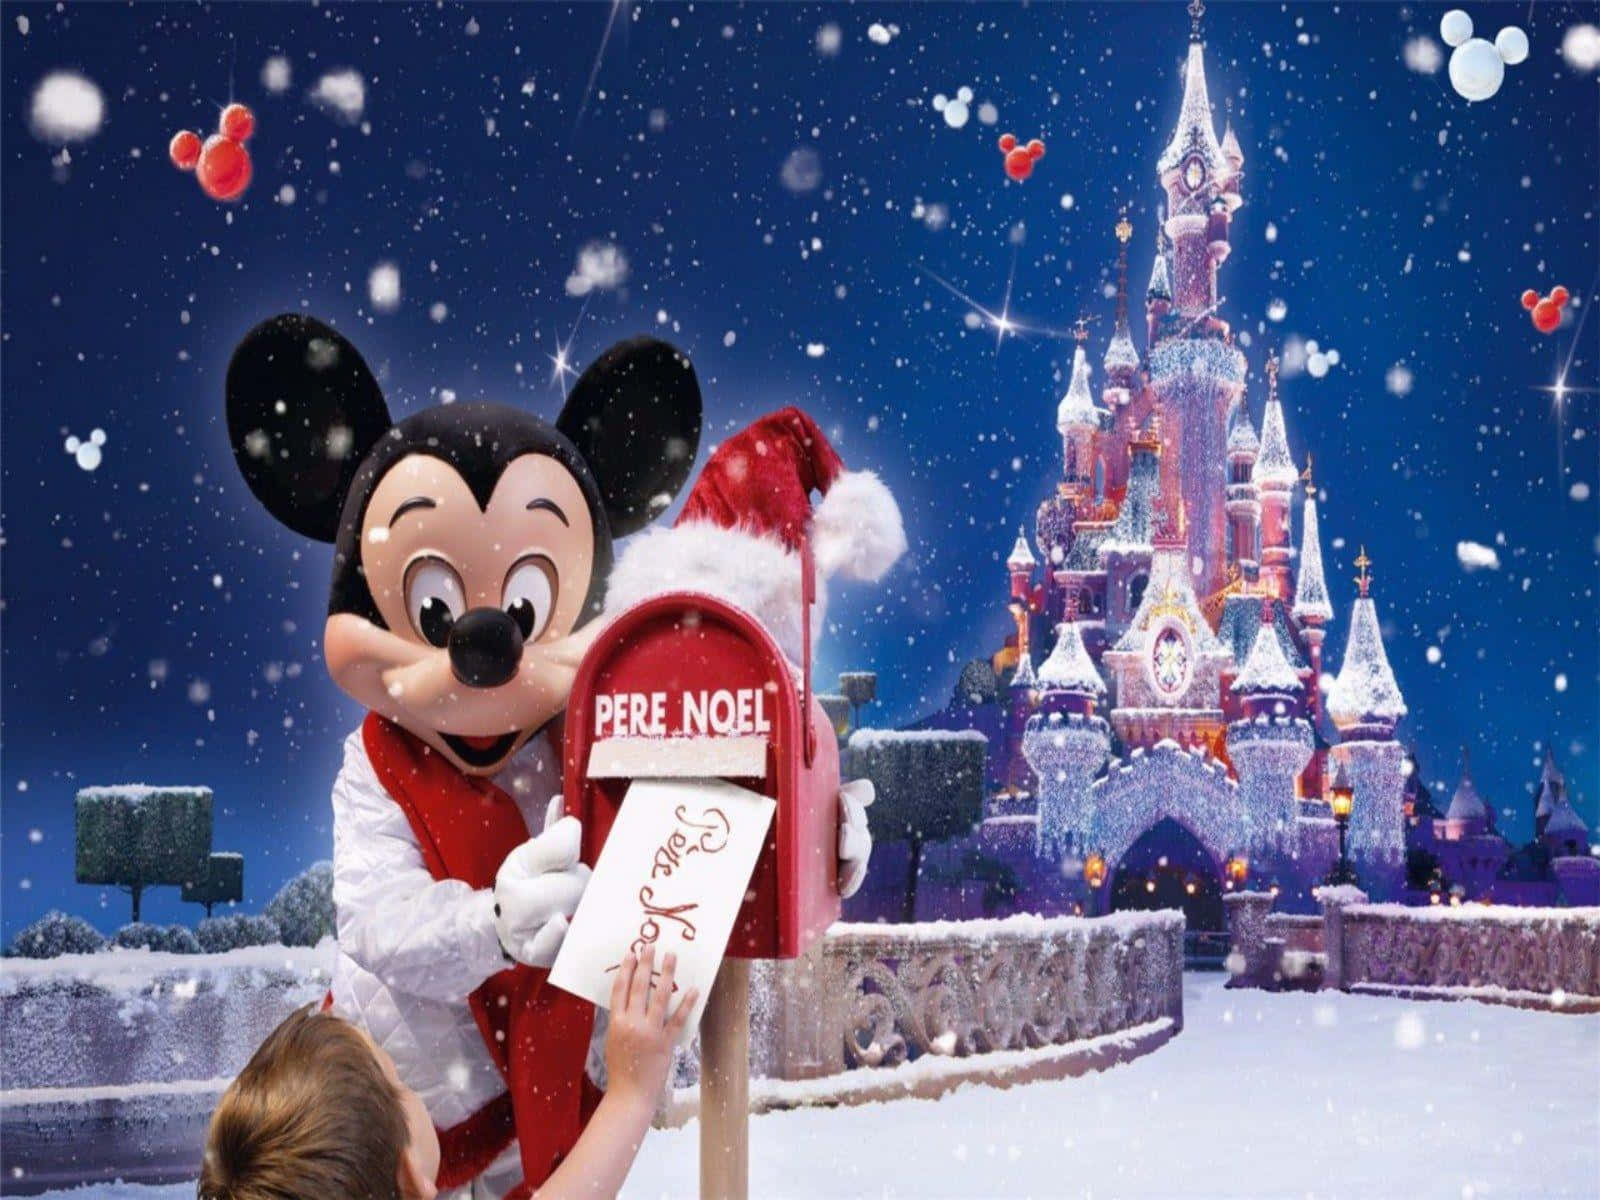 Celebrate the Joy of Christmas with Disney